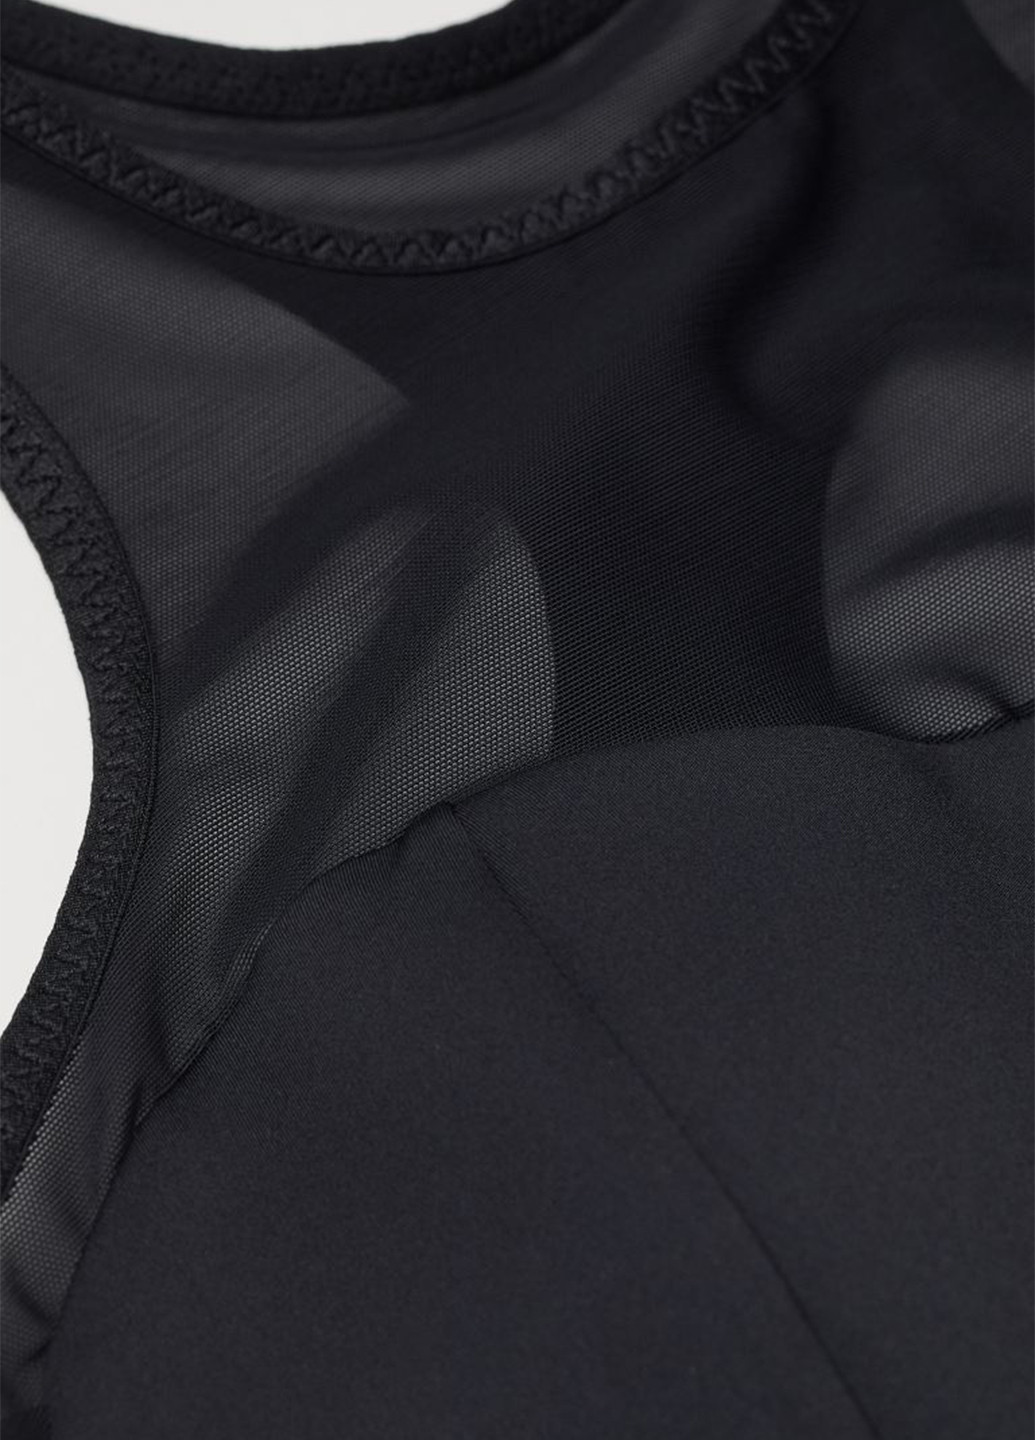 Майка H&M однотонная чёрная спортивная полиэстер, трикотаж